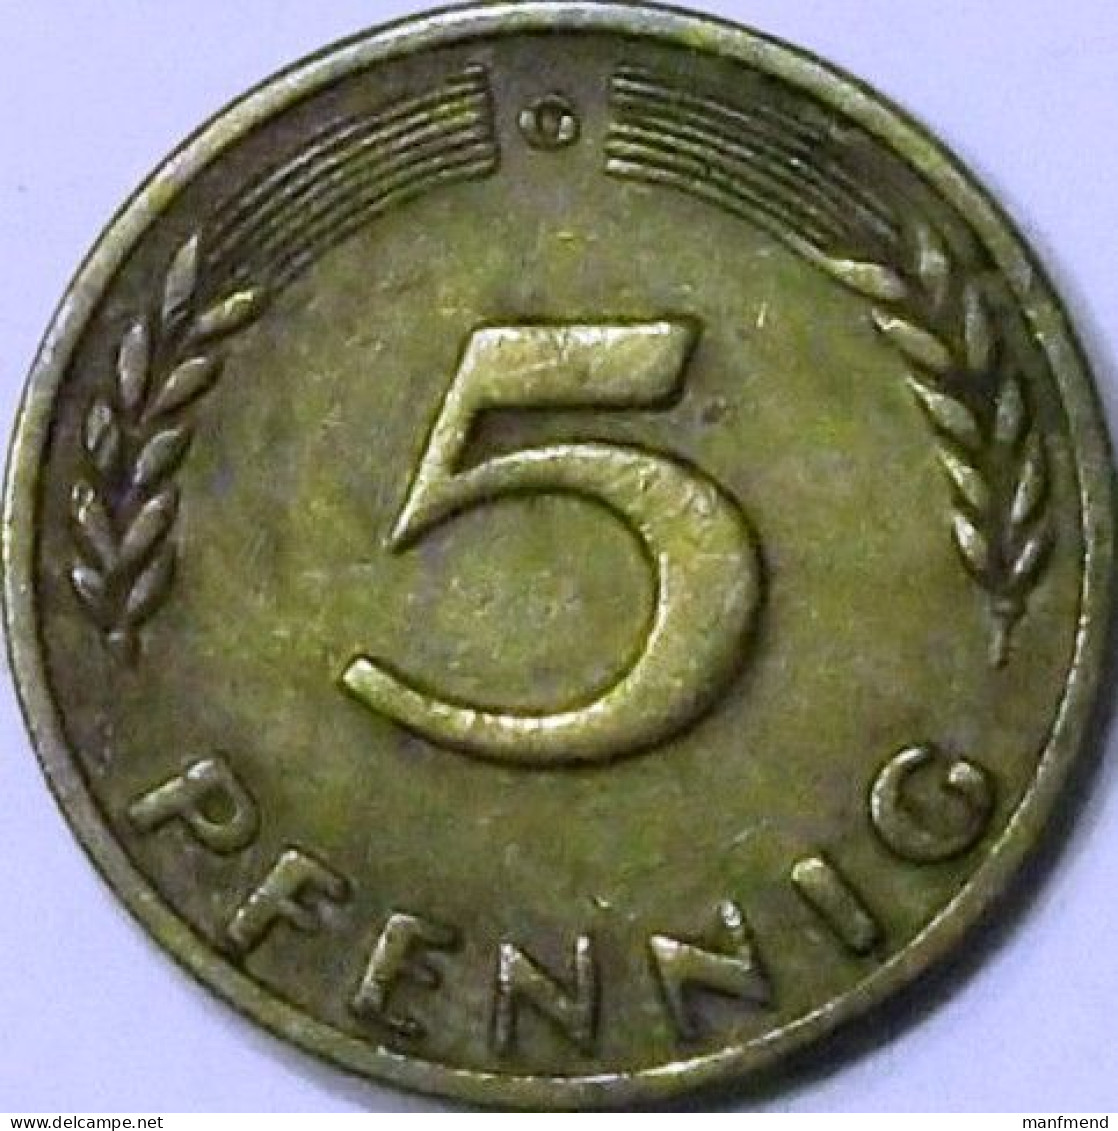 Germany - 1949 - KM 102 - 5 Pfennig - Mintmark "G" - Karlsruhe - VF - Look Scans - 5 Pfennig